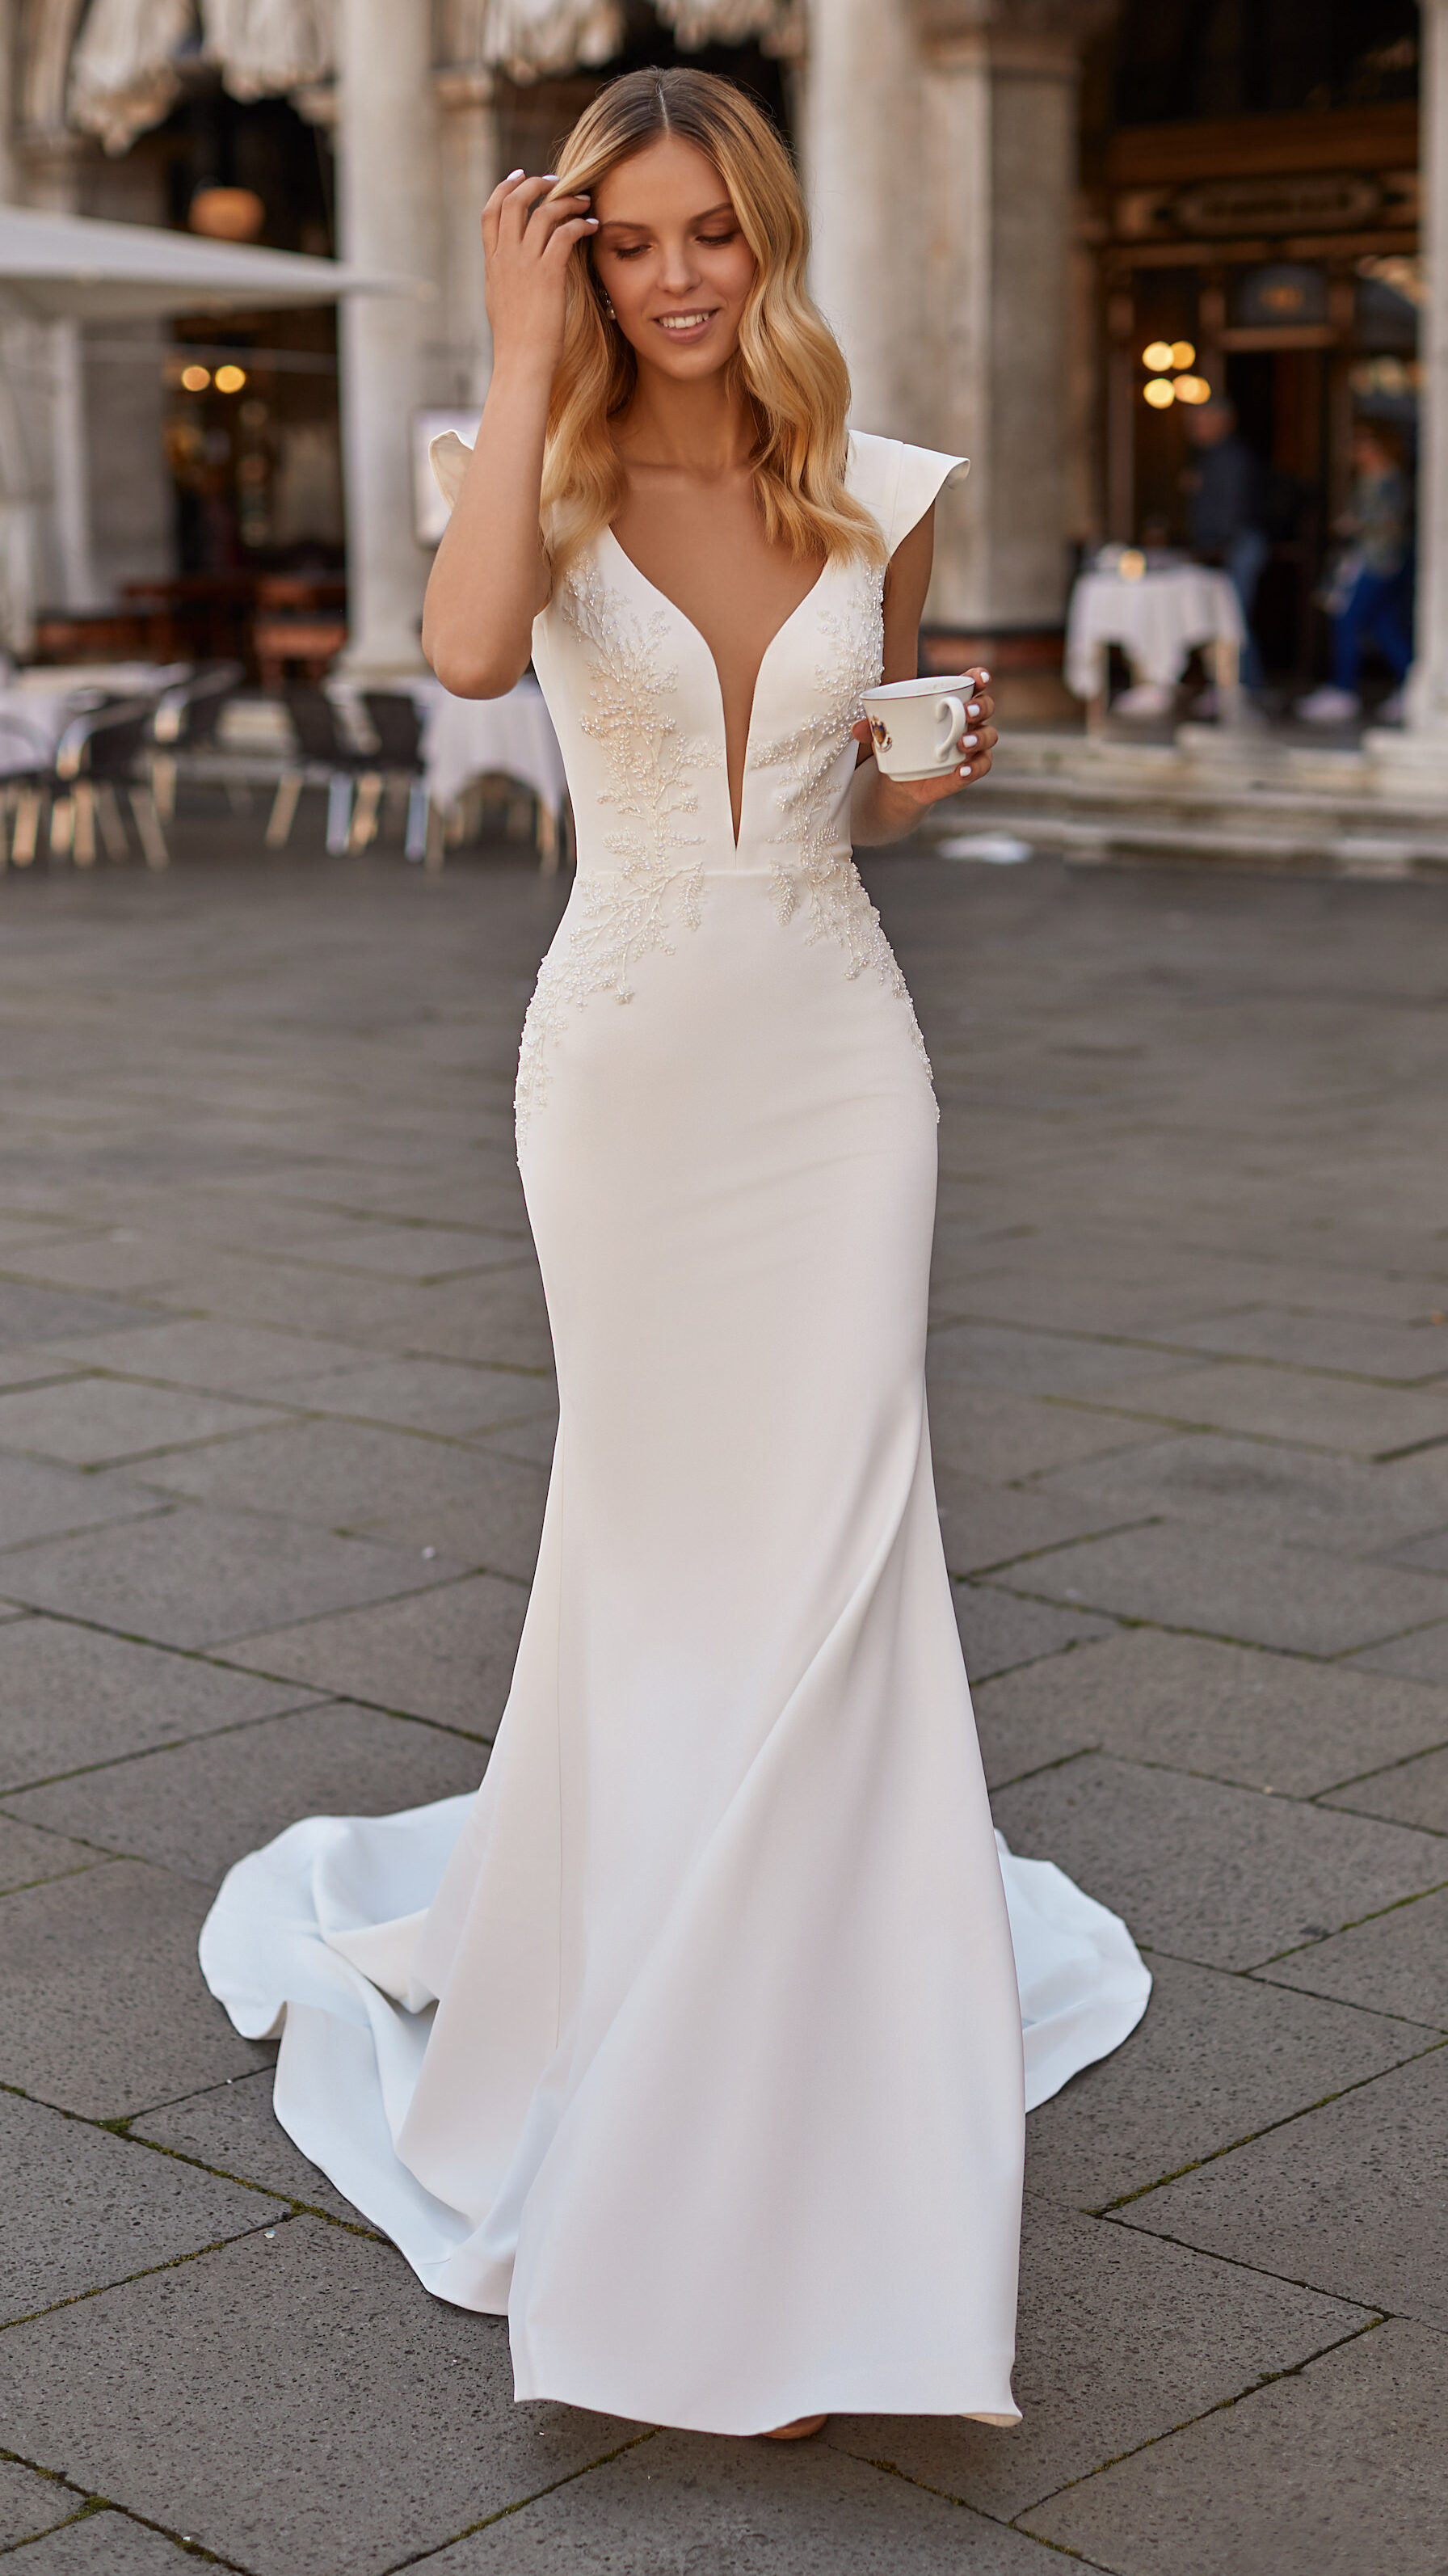 Loren by Katy Corso wedding dress